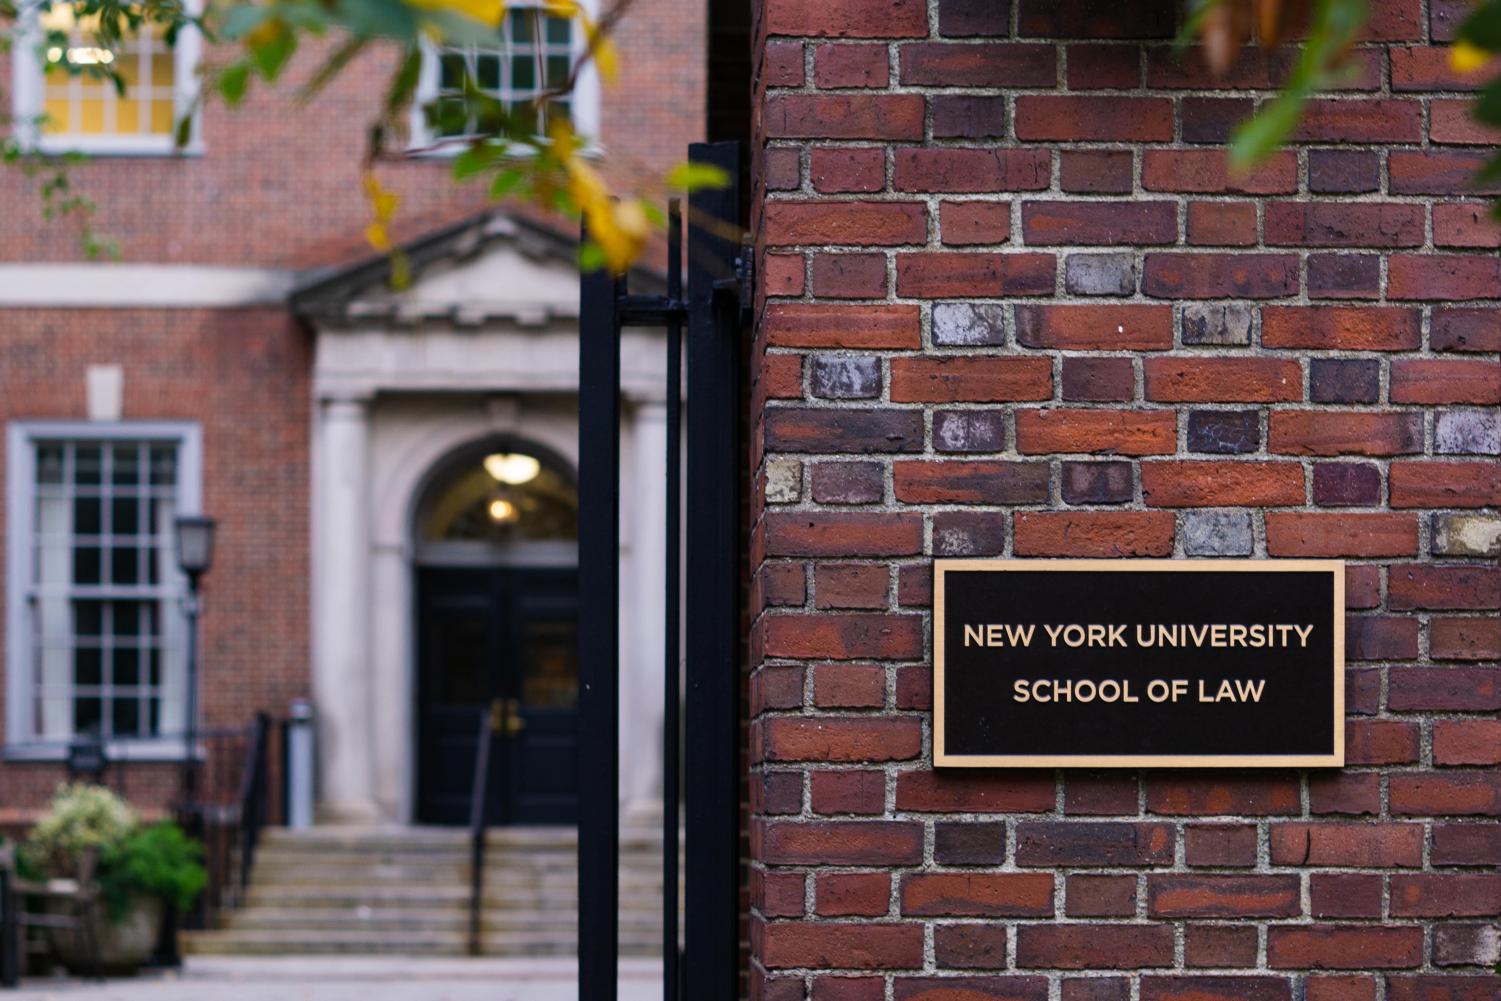 NYU School of Law plaque on brick wall.